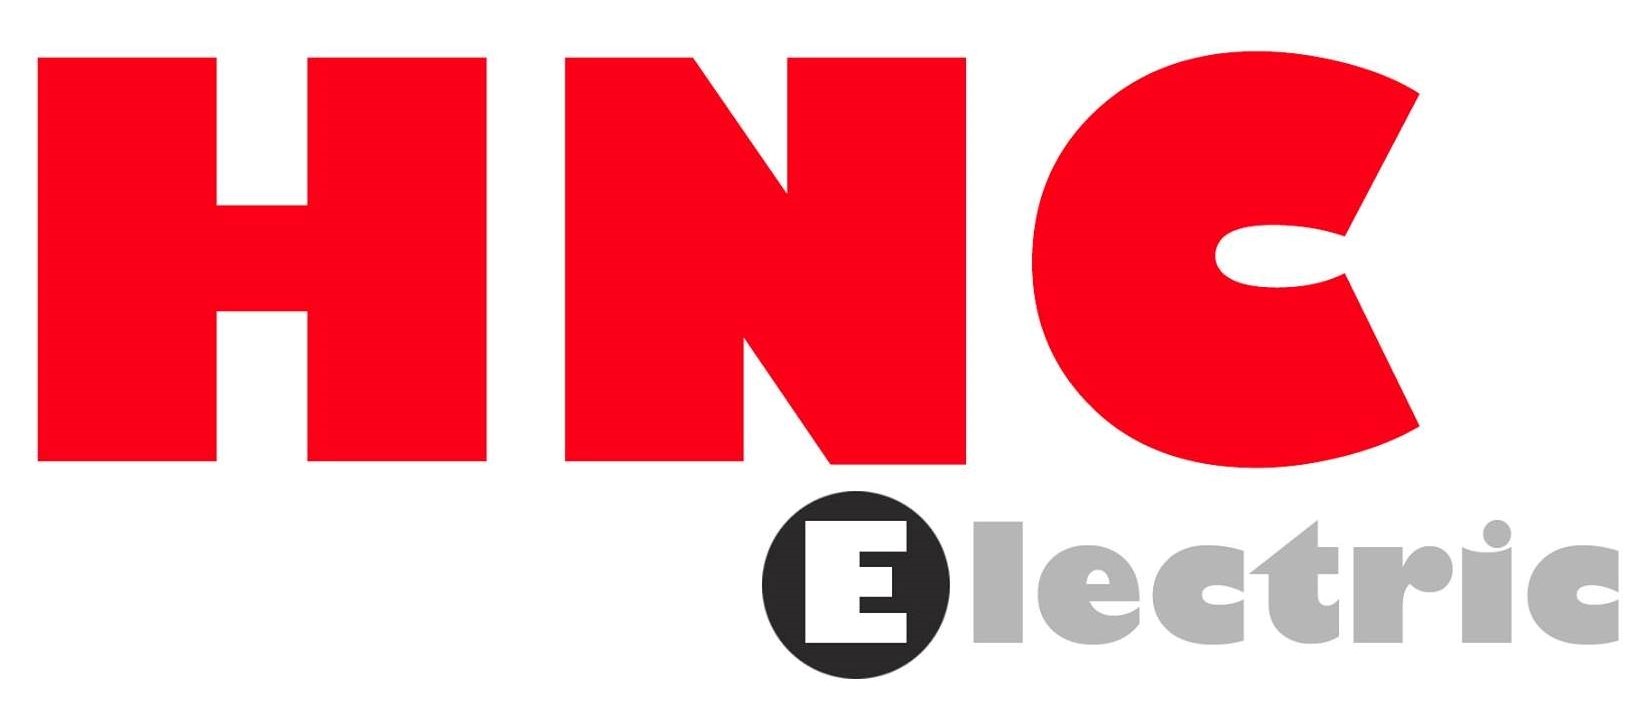 HNC_Electric_logo.jpg